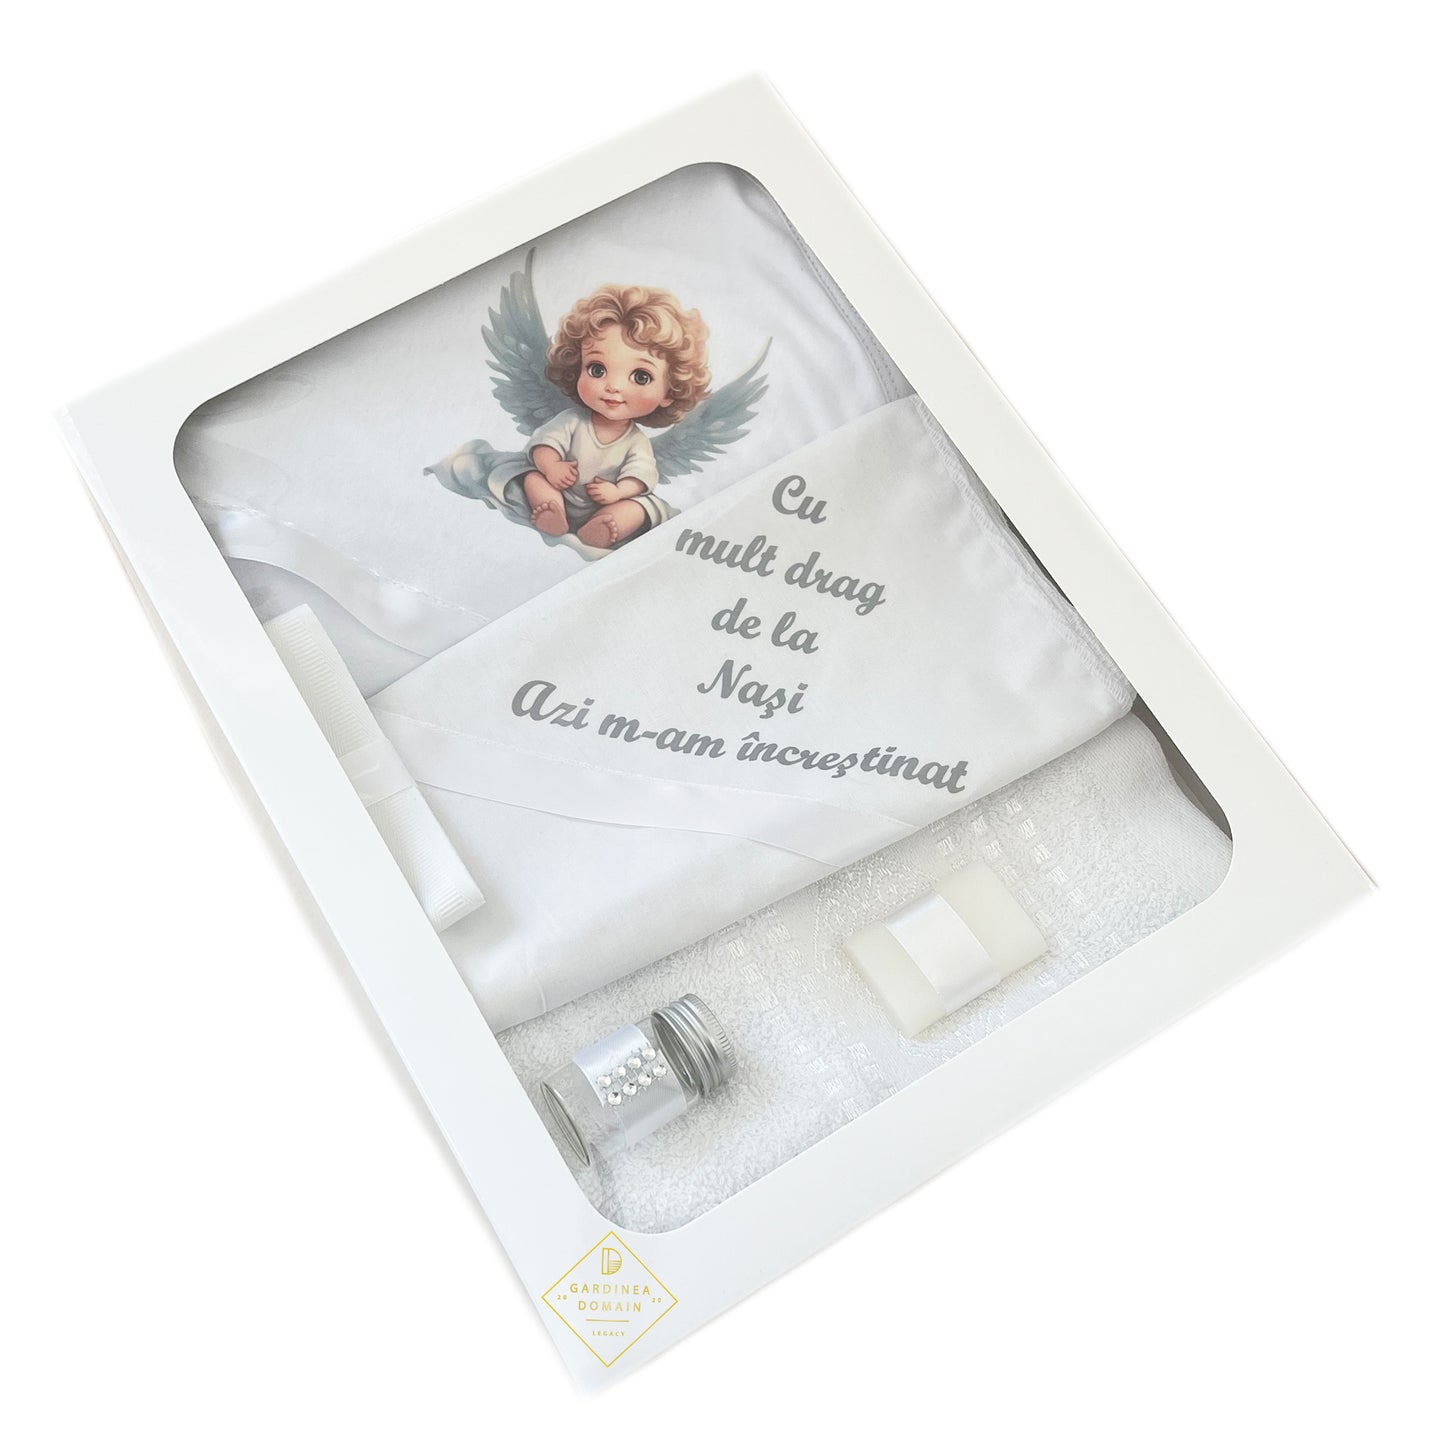 Trusou ingeras realist botez Gardinea Domain® 6 piese, in cutie cadou, bumbac 100%, personalizat cu mesajul "Cu drag de la nasi!", alb